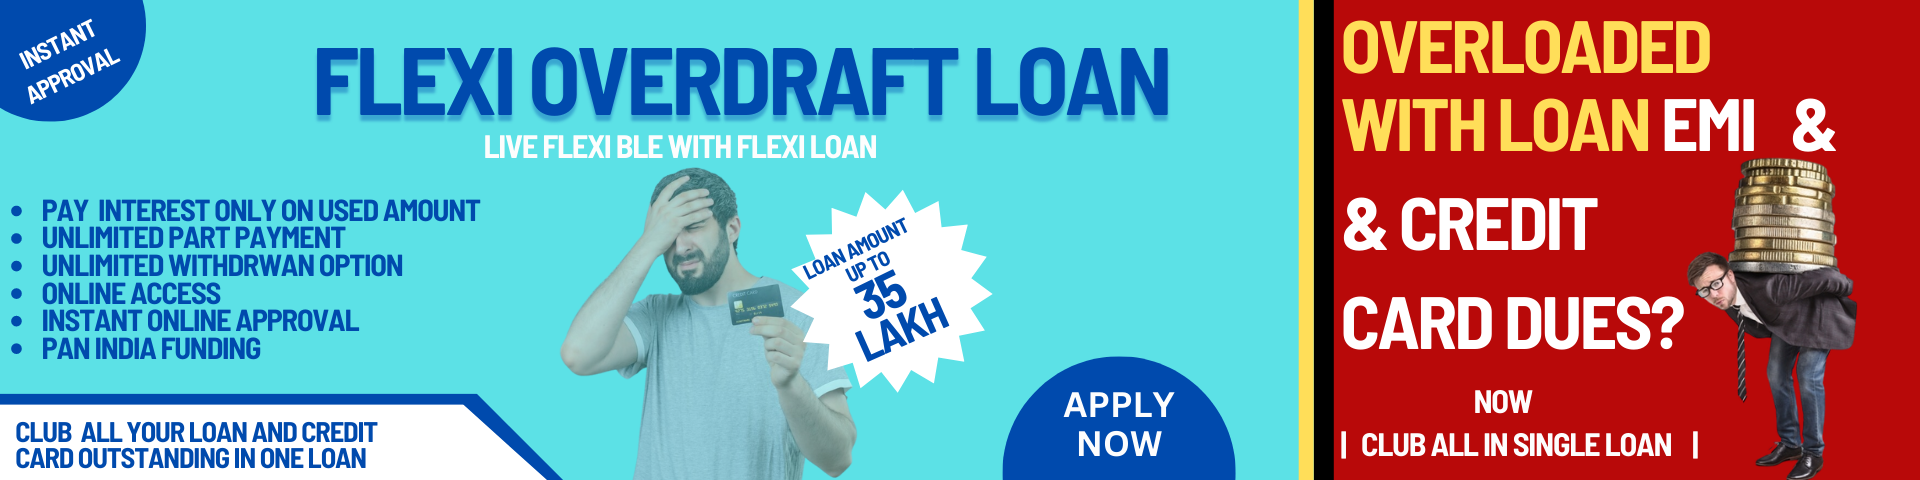 apply flexi loan ovardraft at lowest rate